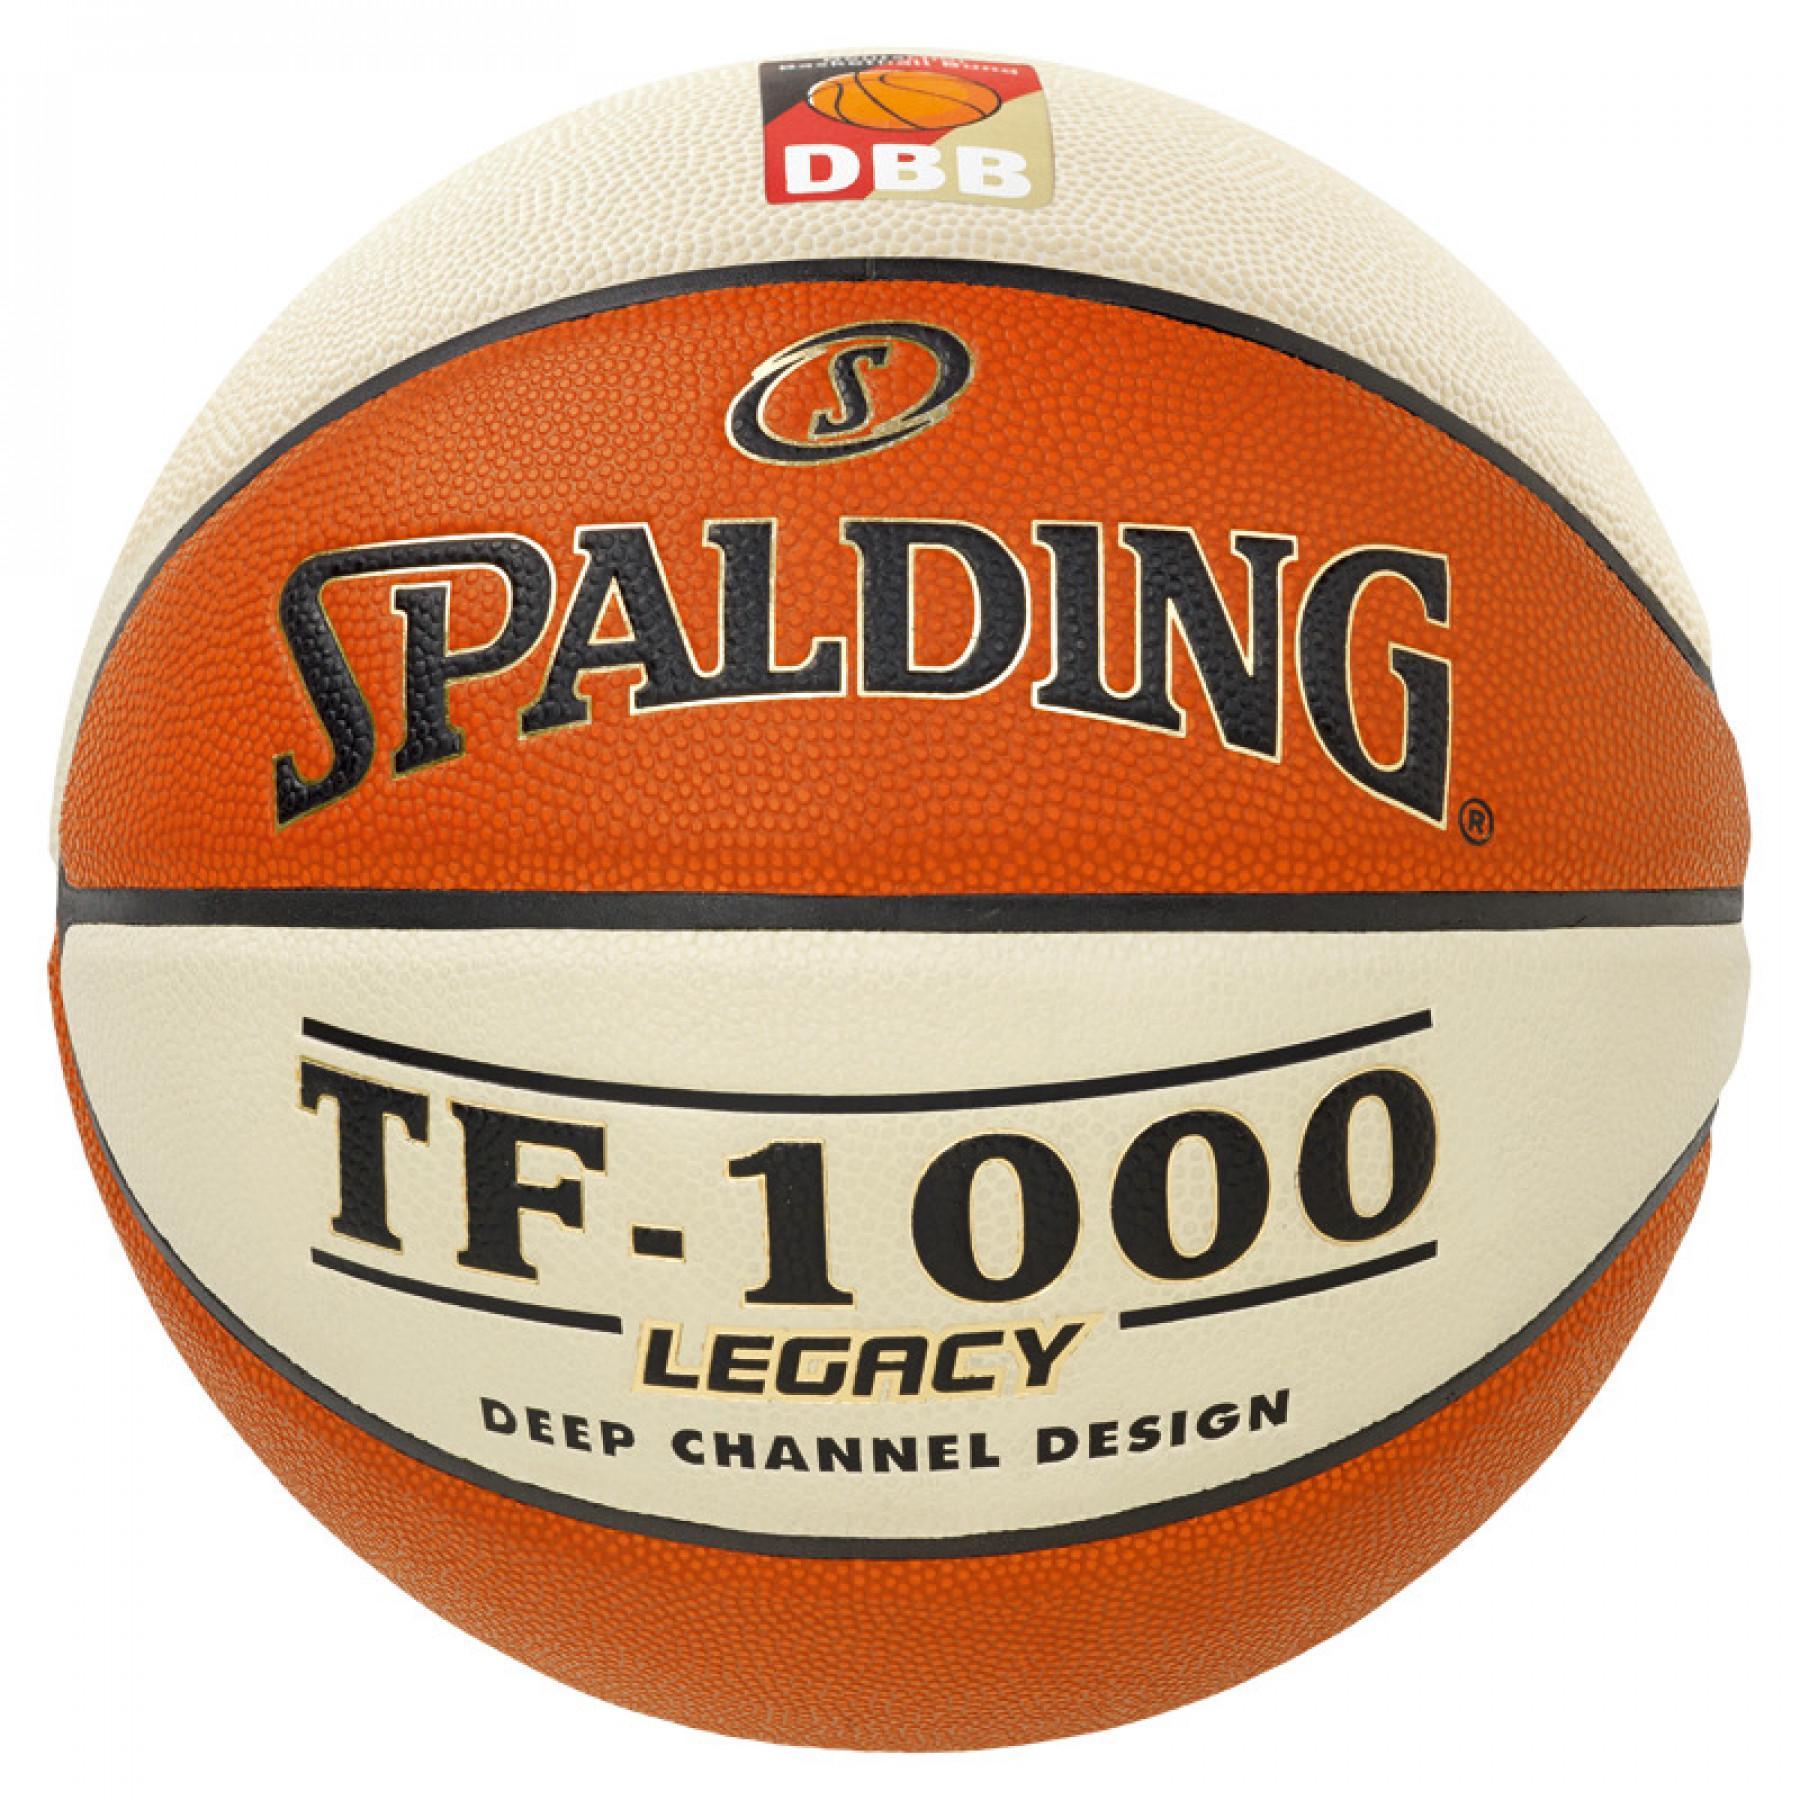 Spalding baloncesto DBB tf1000 Legacy 